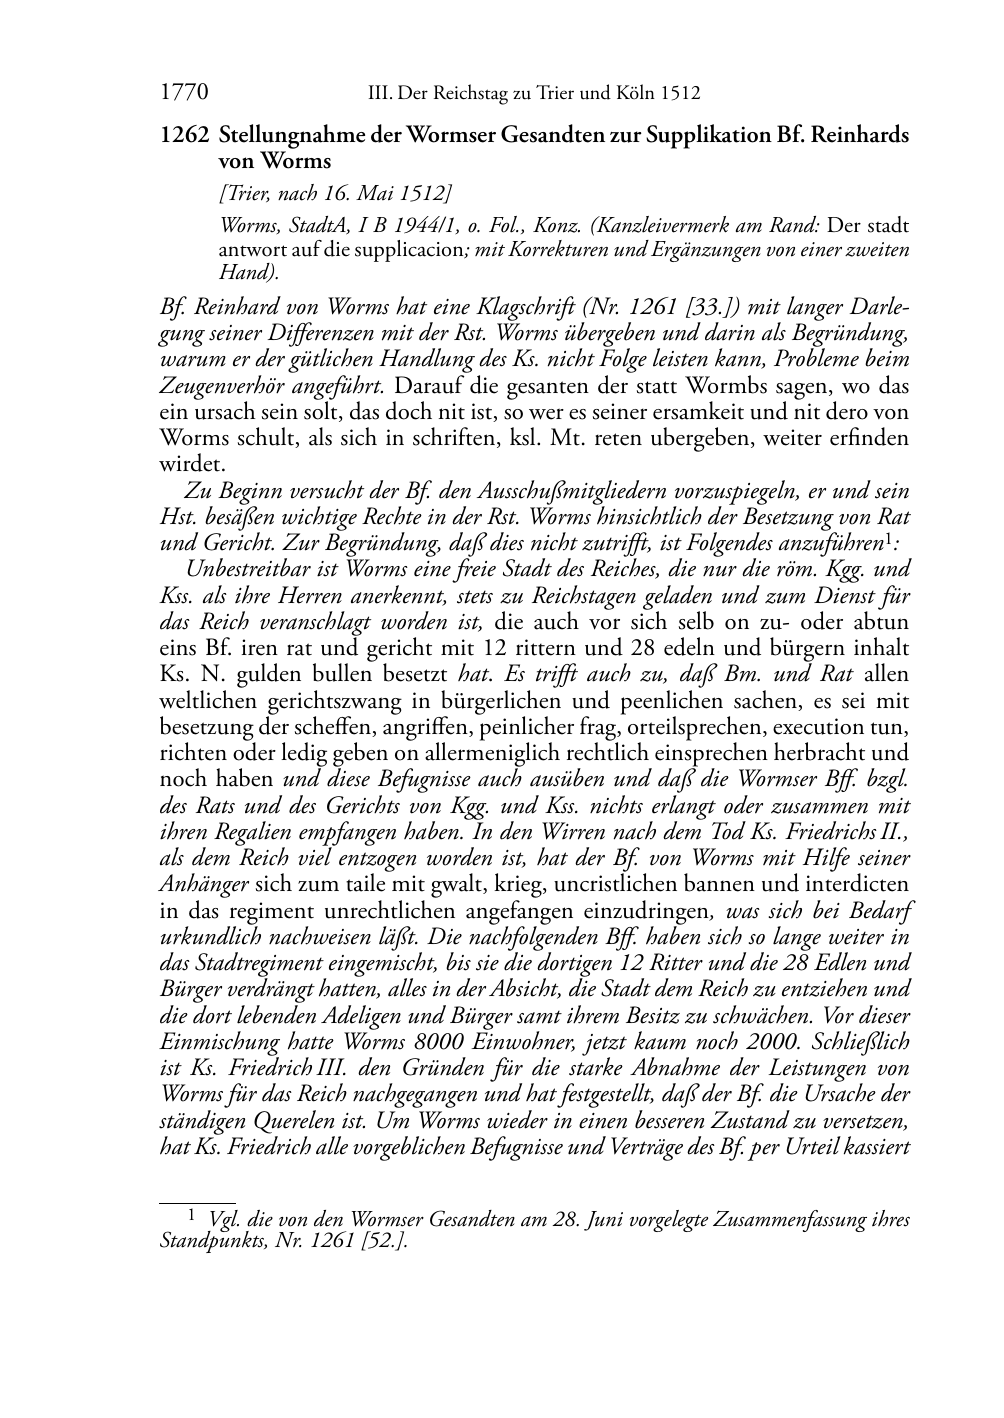 Seite des Bandes rta1510-page-1770.png